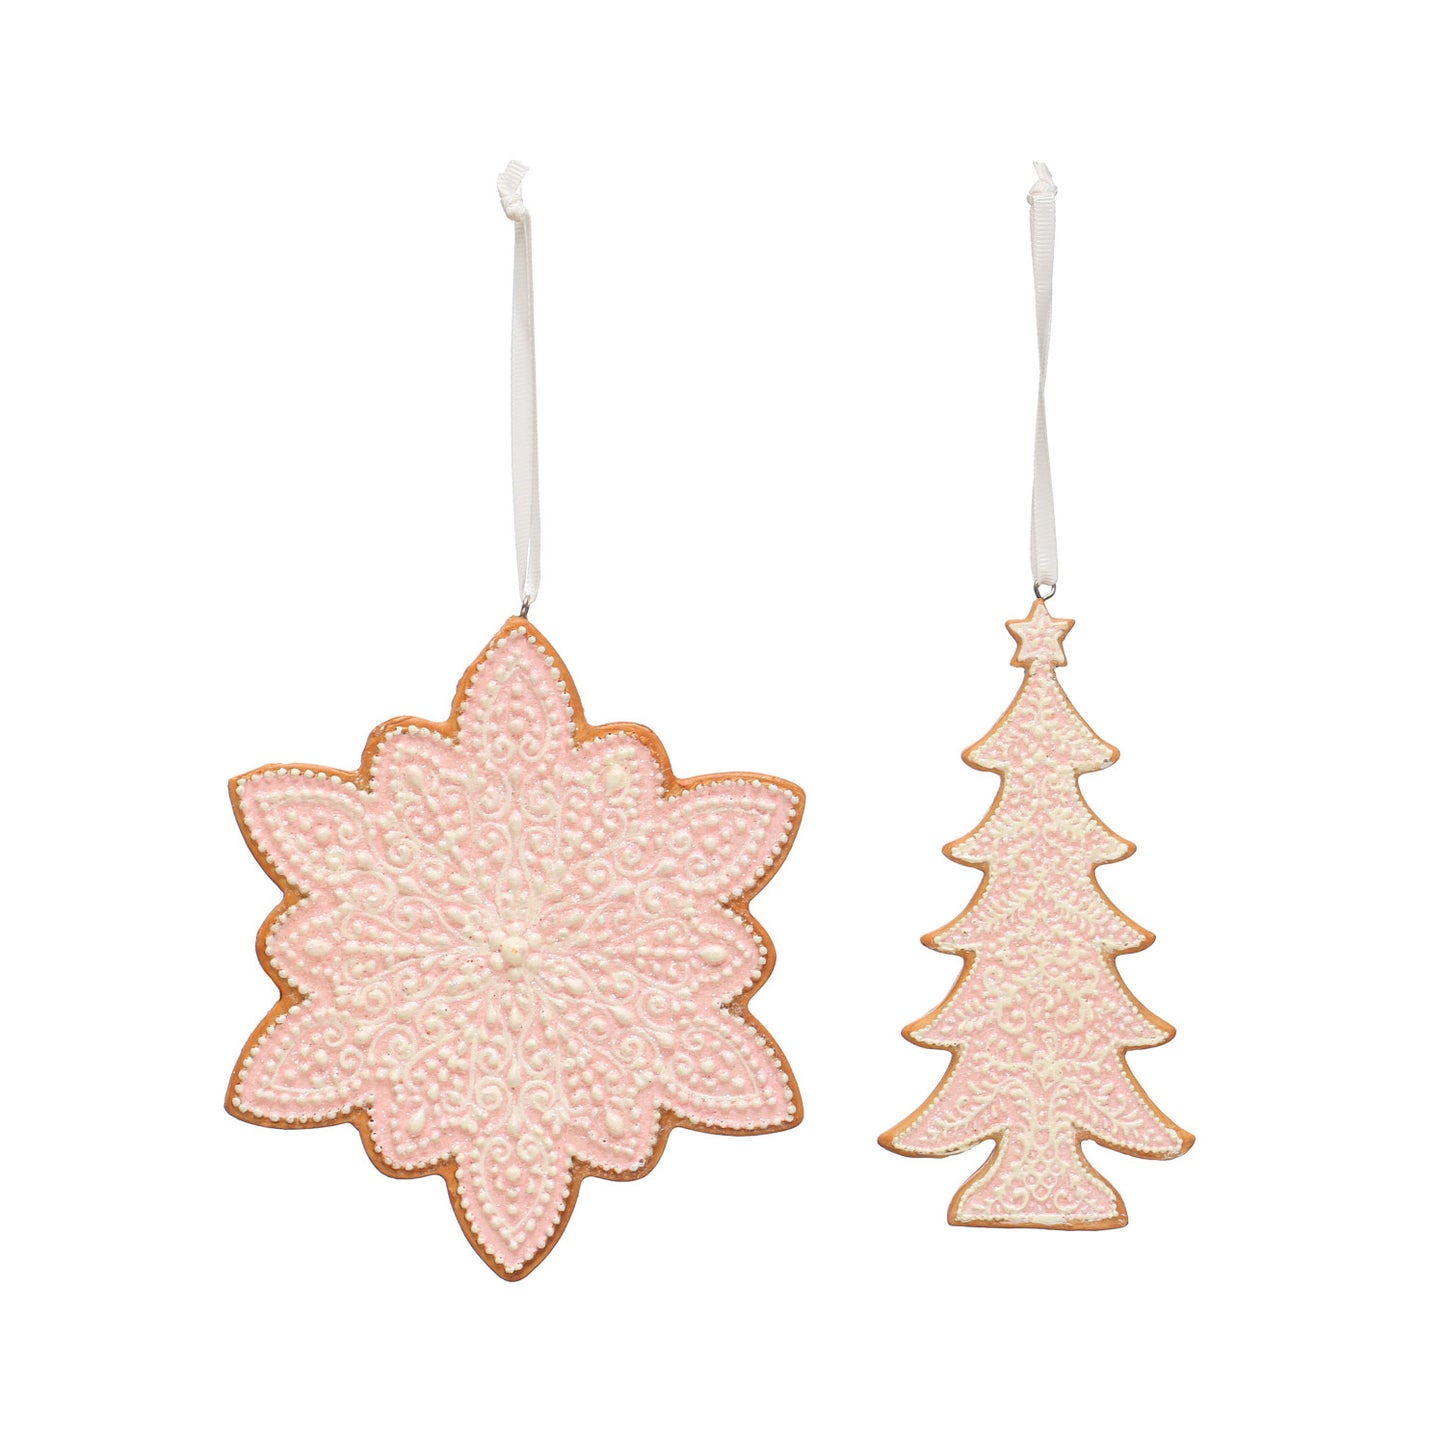 Resin Tree or Snowflake Cookie Ornament